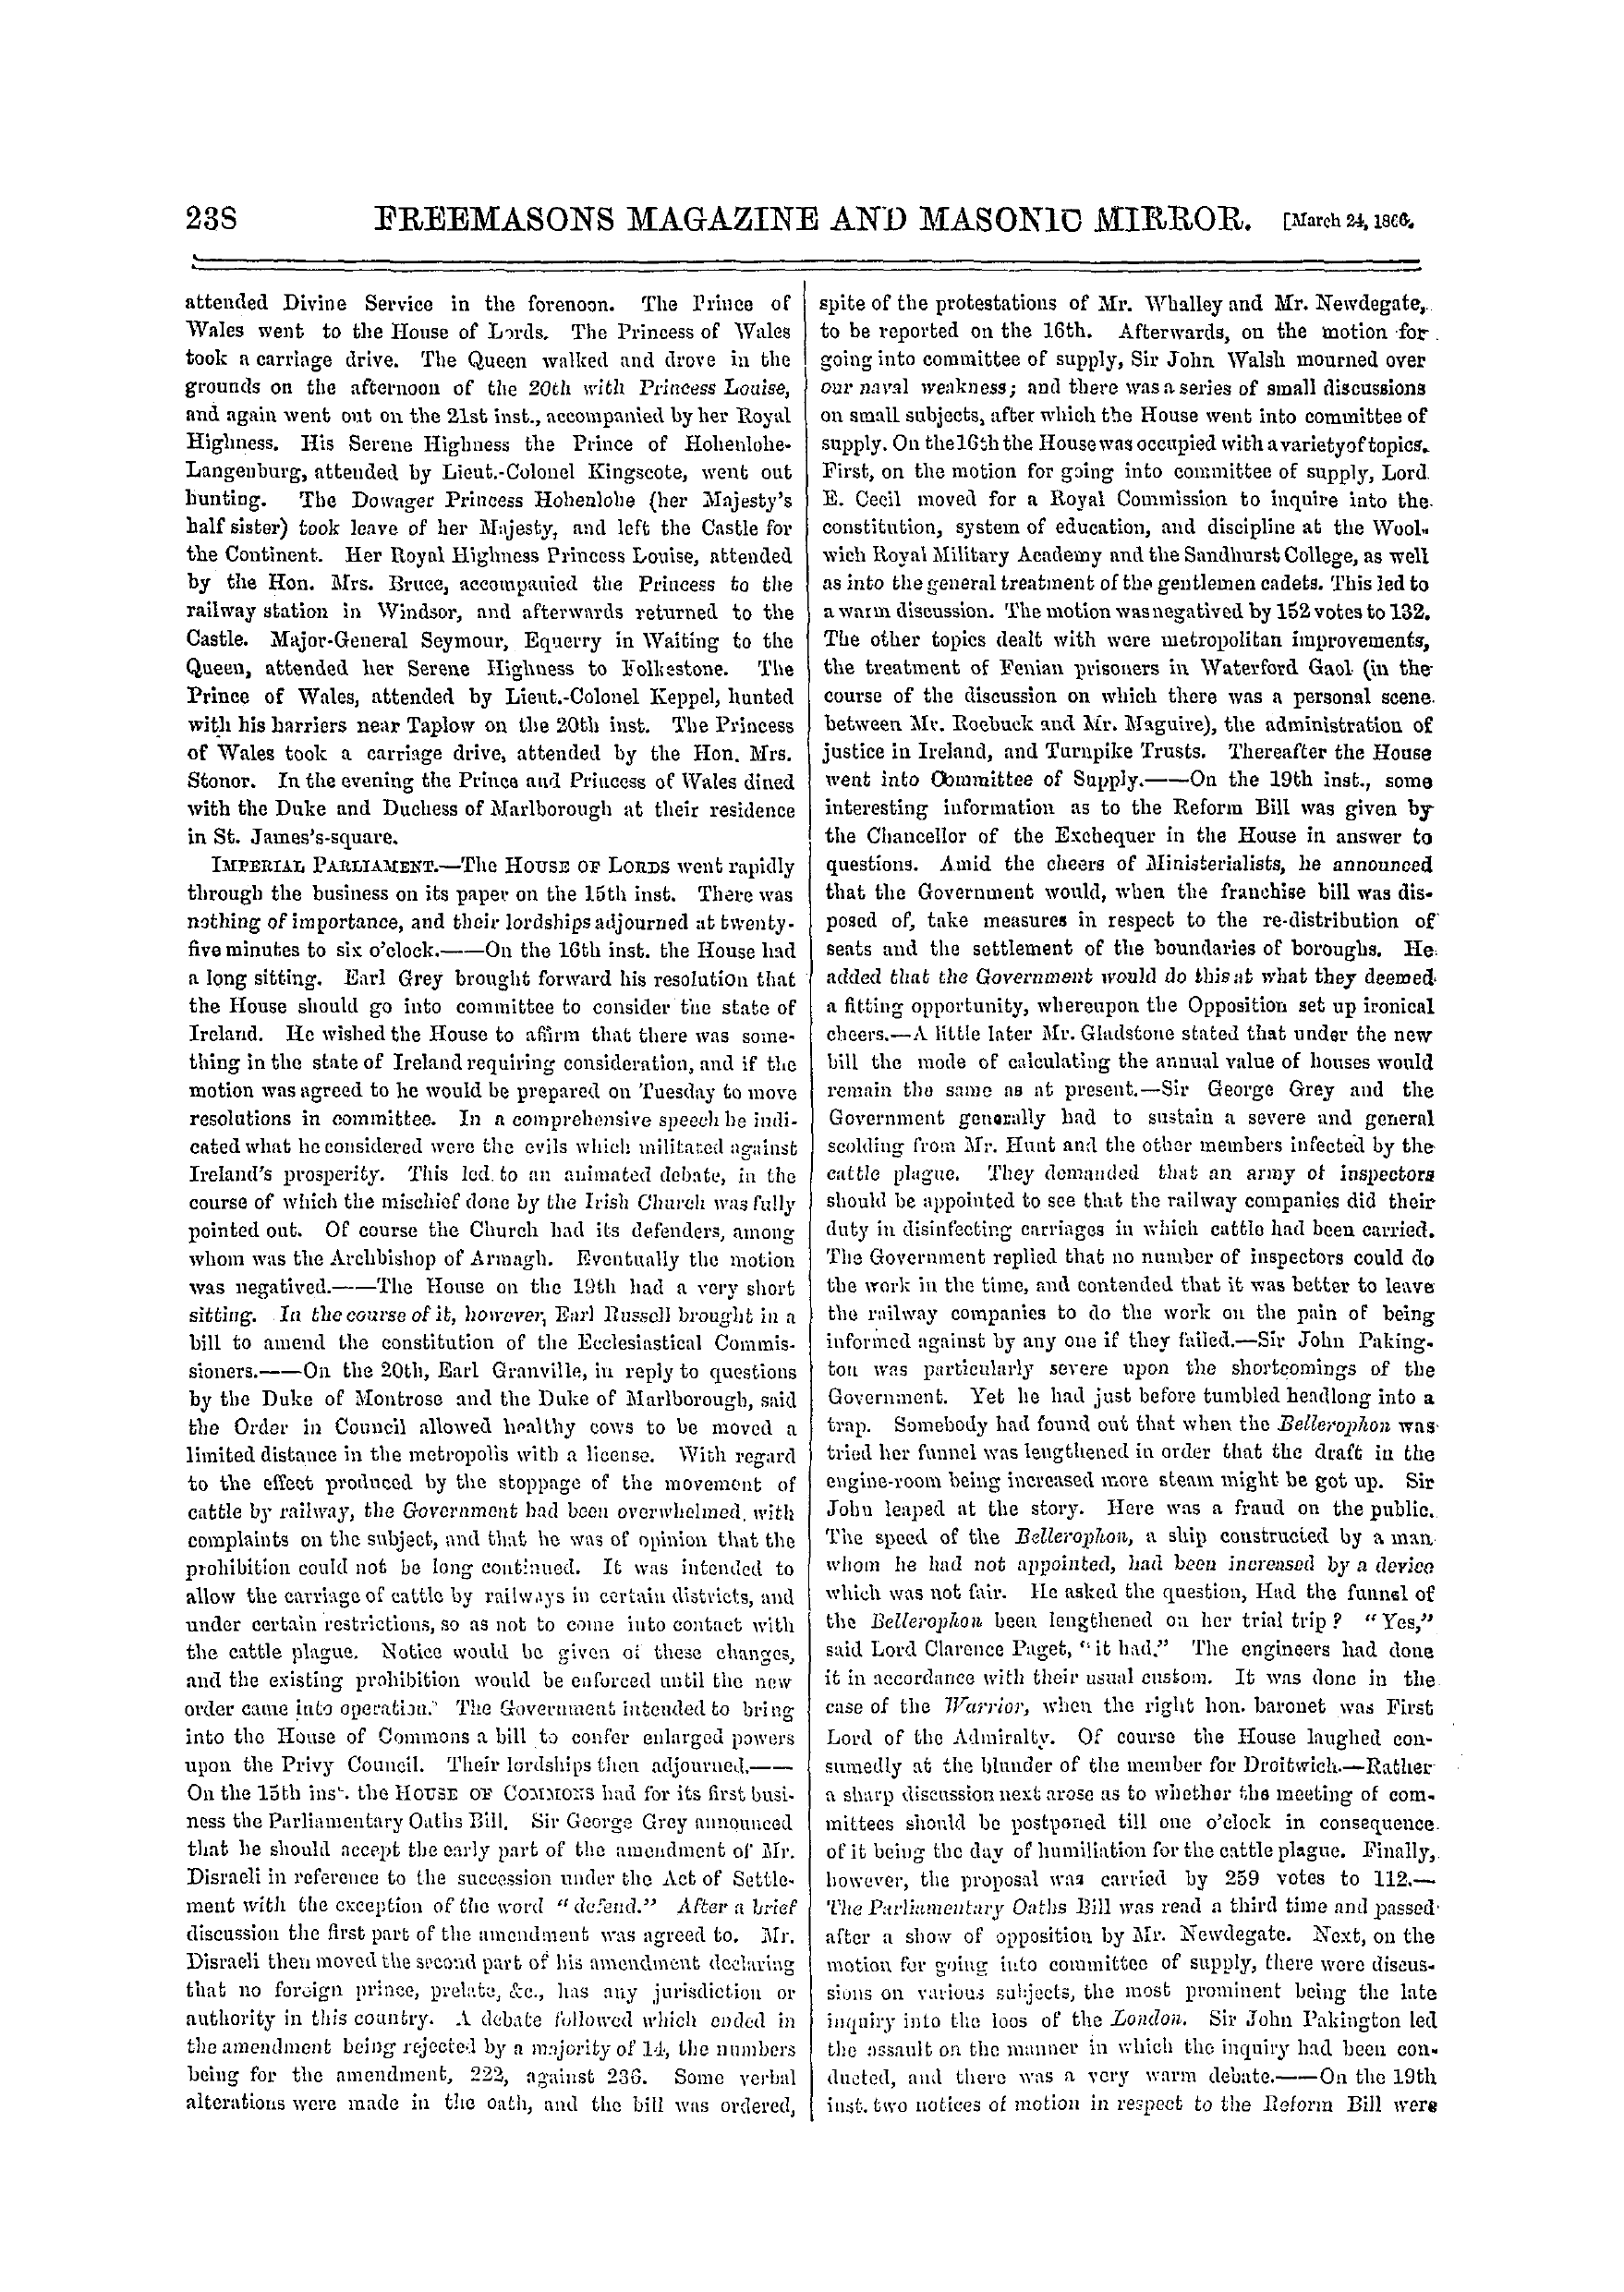 The Freemasons' Monthly Magazine: 1866-03-24 - The Week.